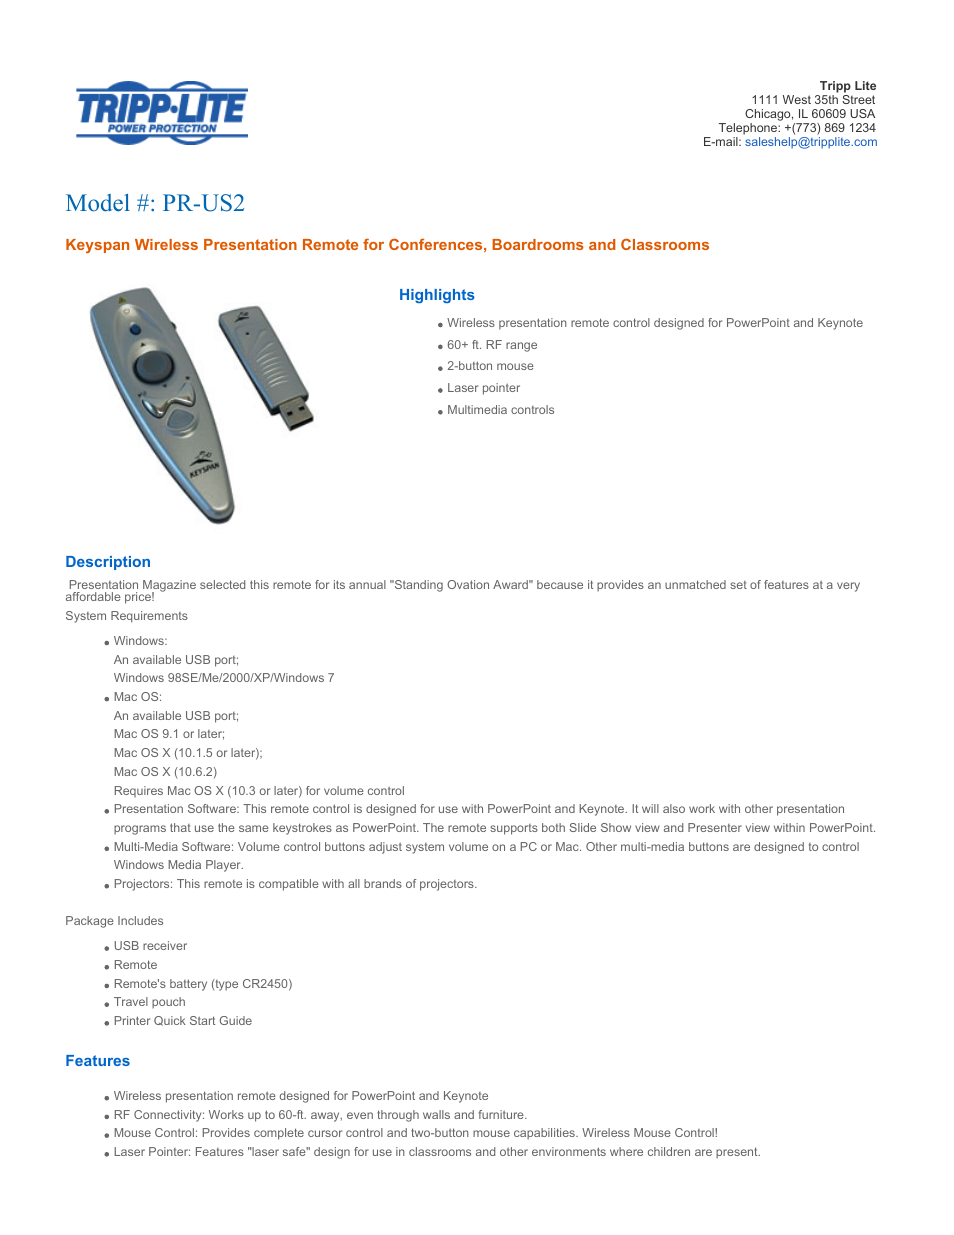 Keyspan Wireless Presentation Remote PR-US2